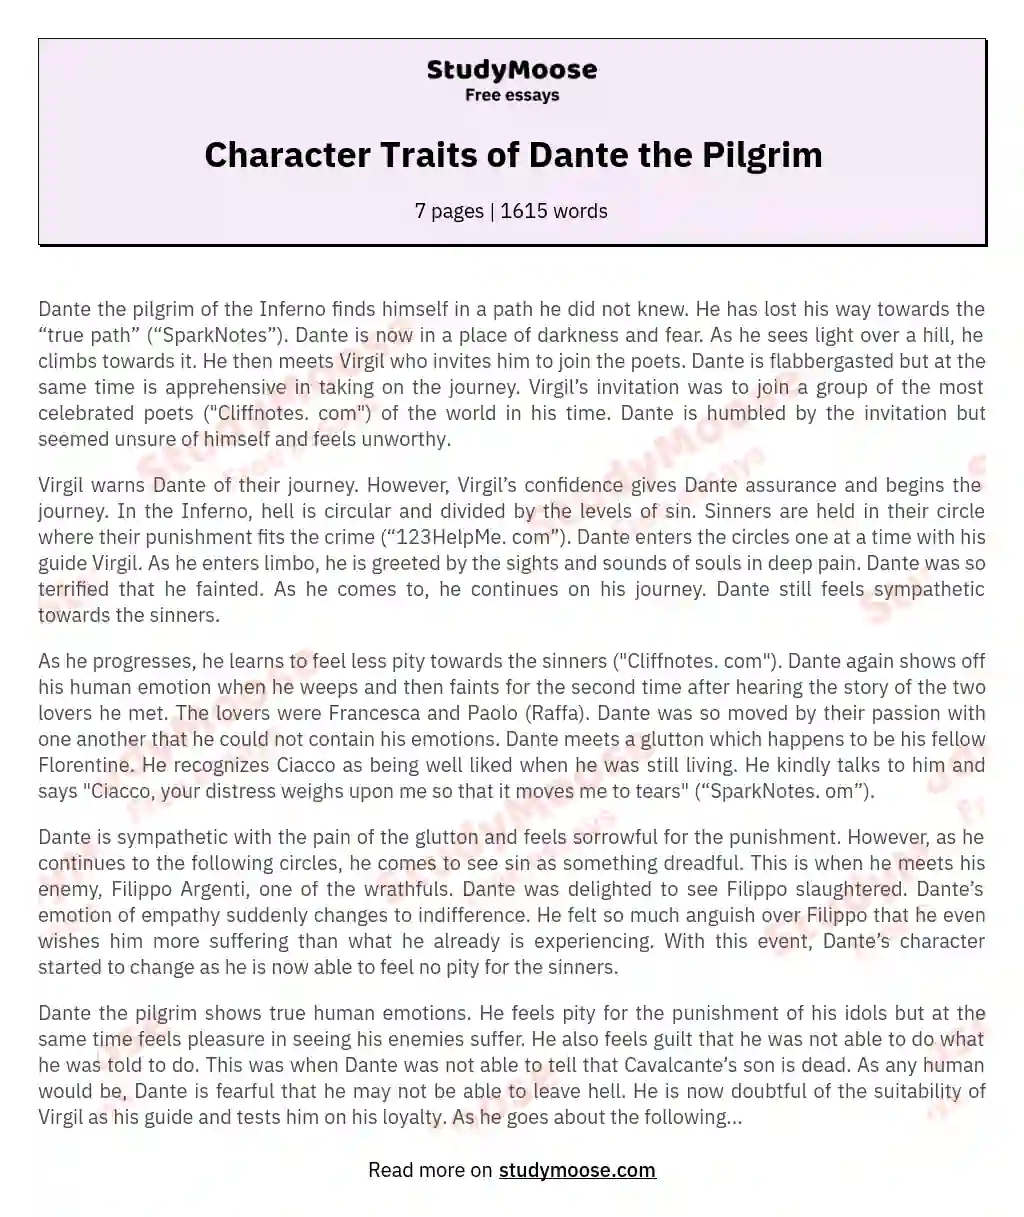 Character Traits of Dante the Pilgrim essay